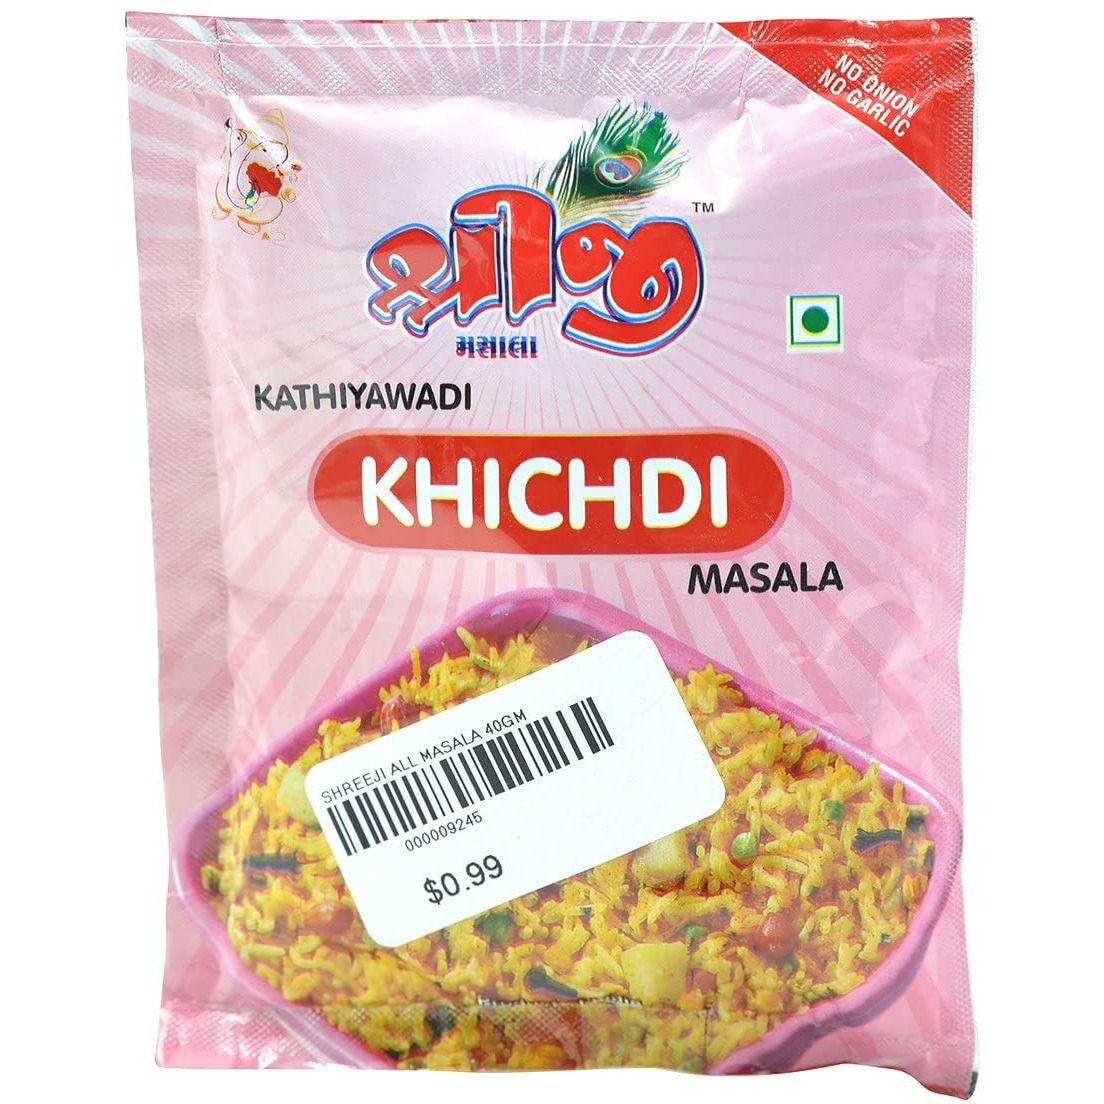 Shreeji Masala, Khichdi Masala, 40 Grams(gm)